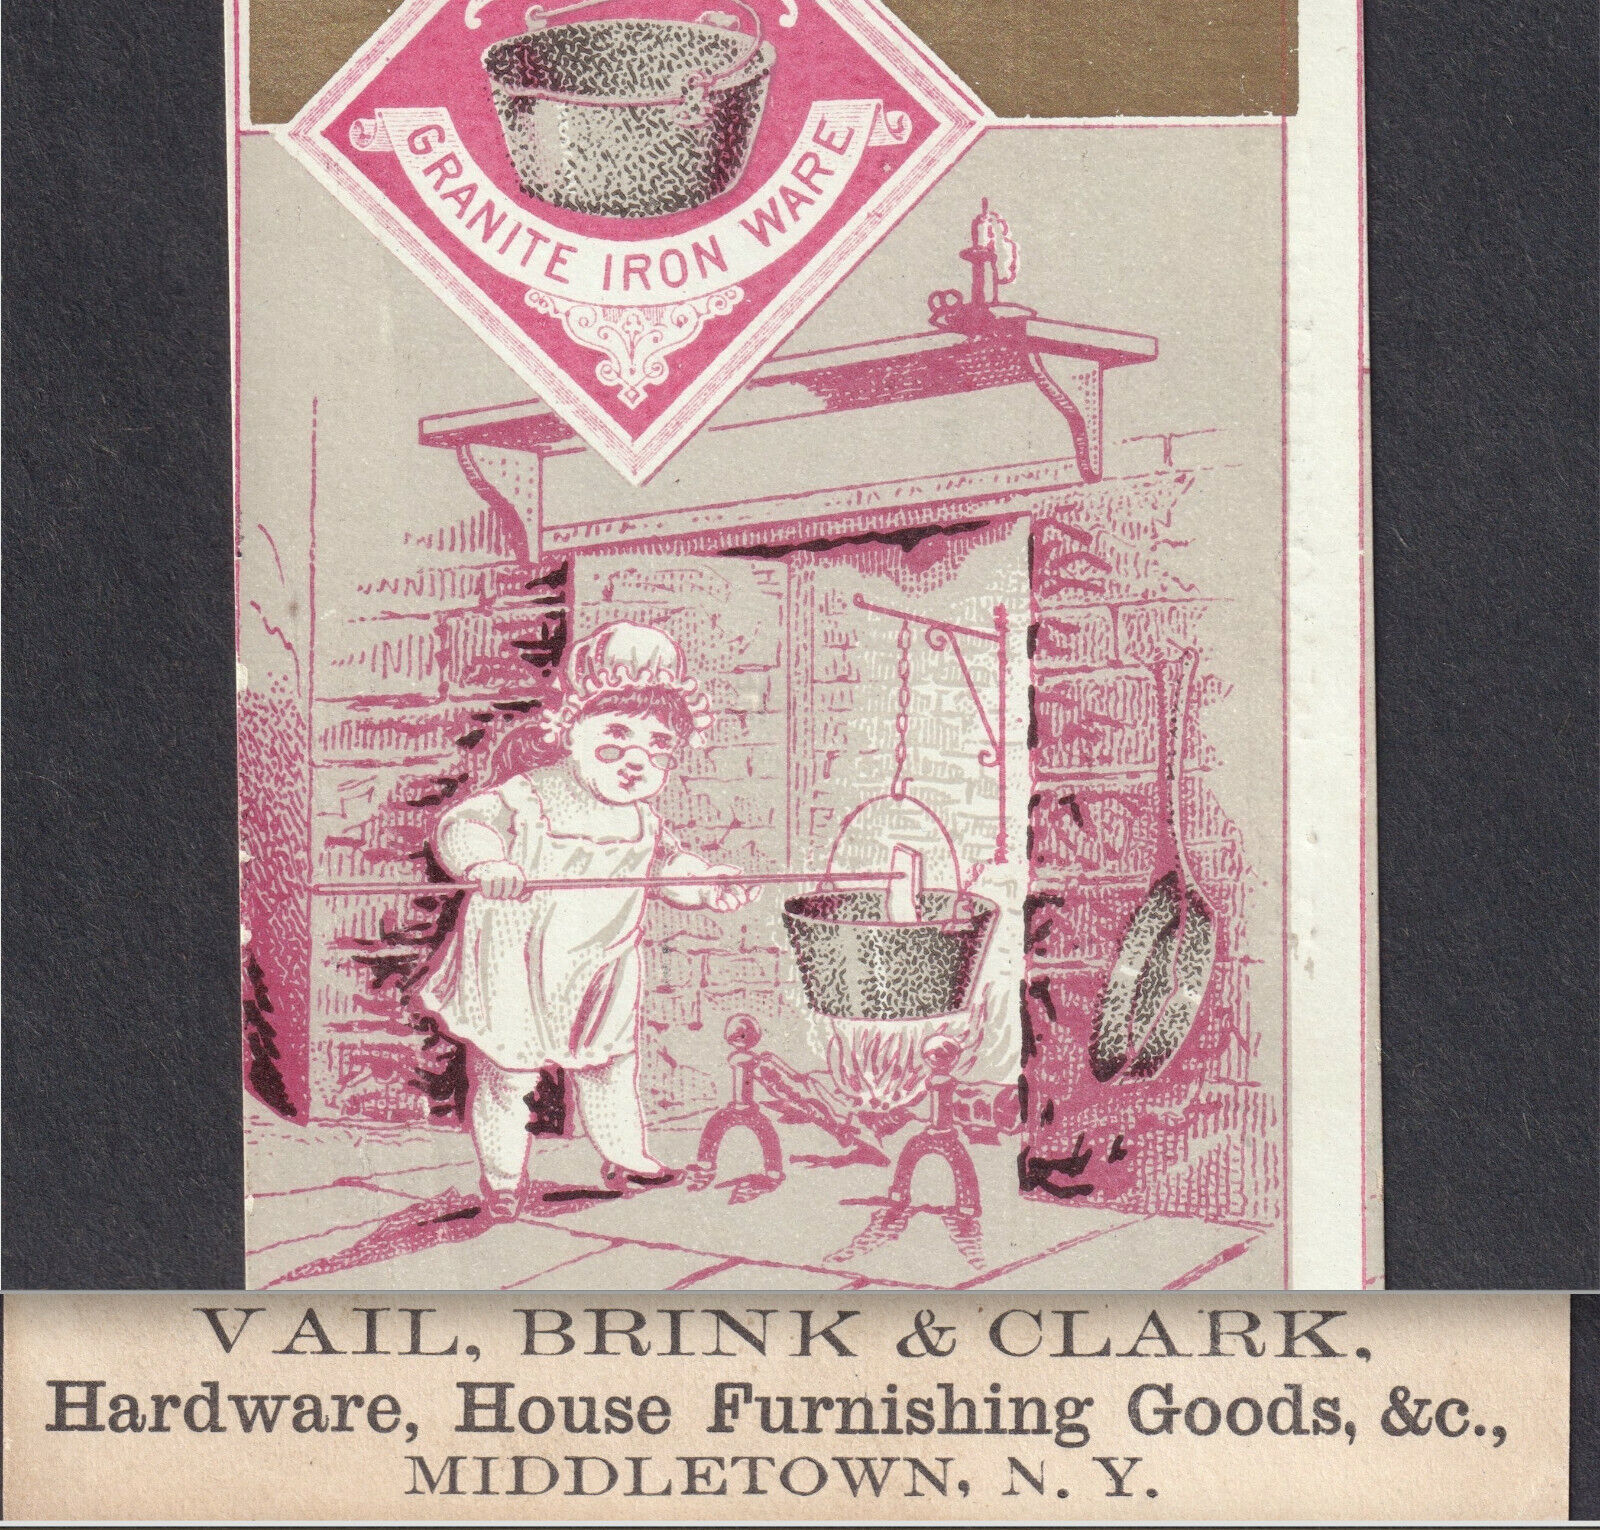 Middletown NY Vail Brink & Clark Hardware Store Iron Kitchen Graniteware Ad Card